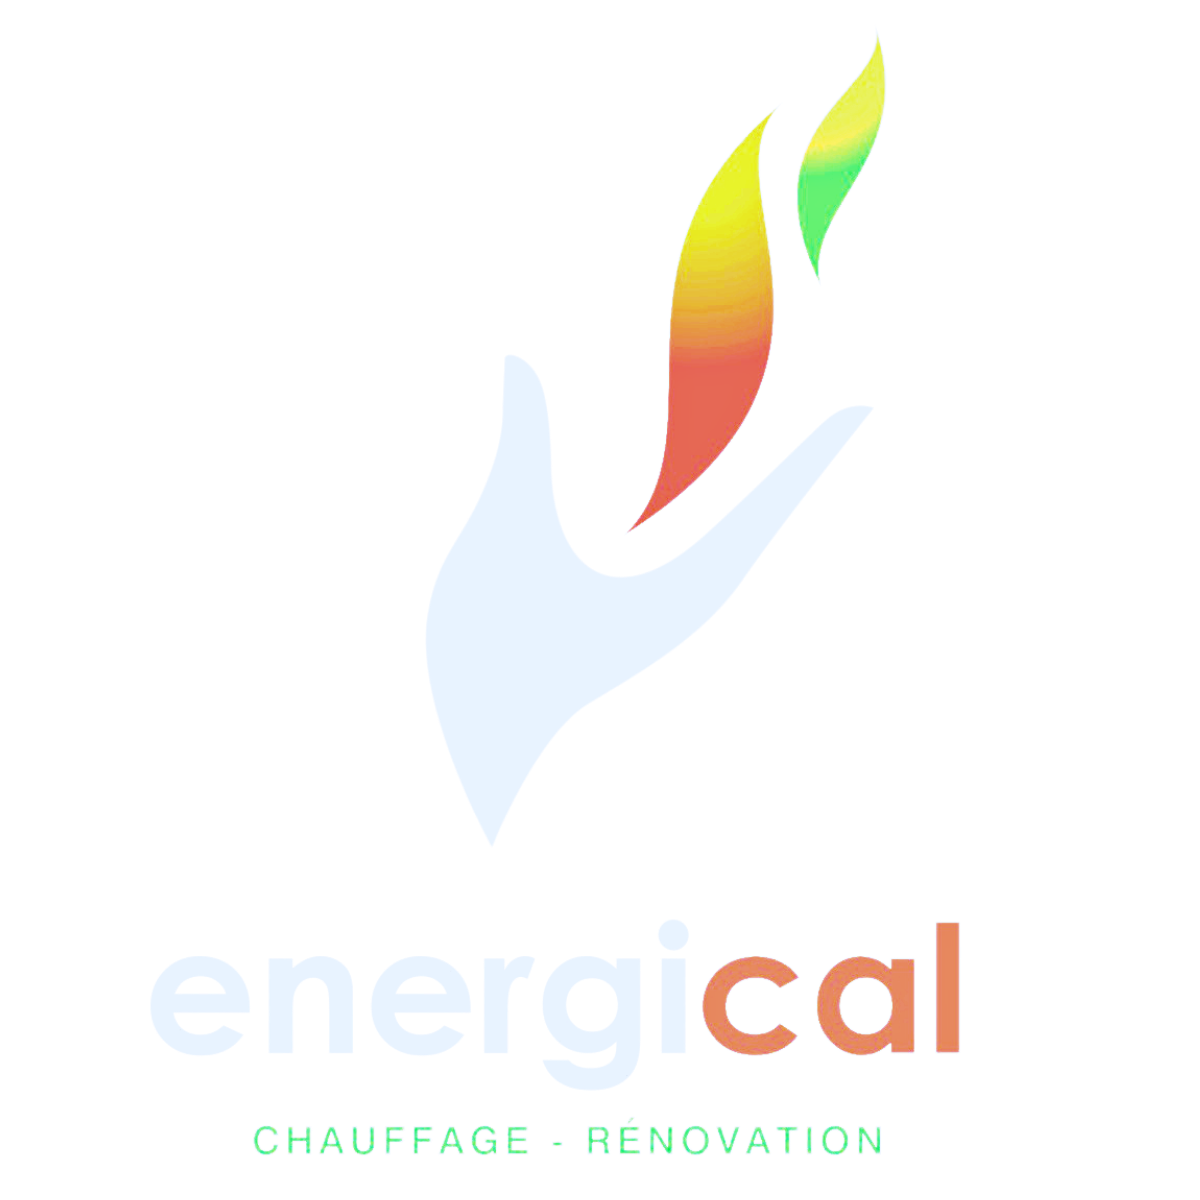 energical logo renovation energetique